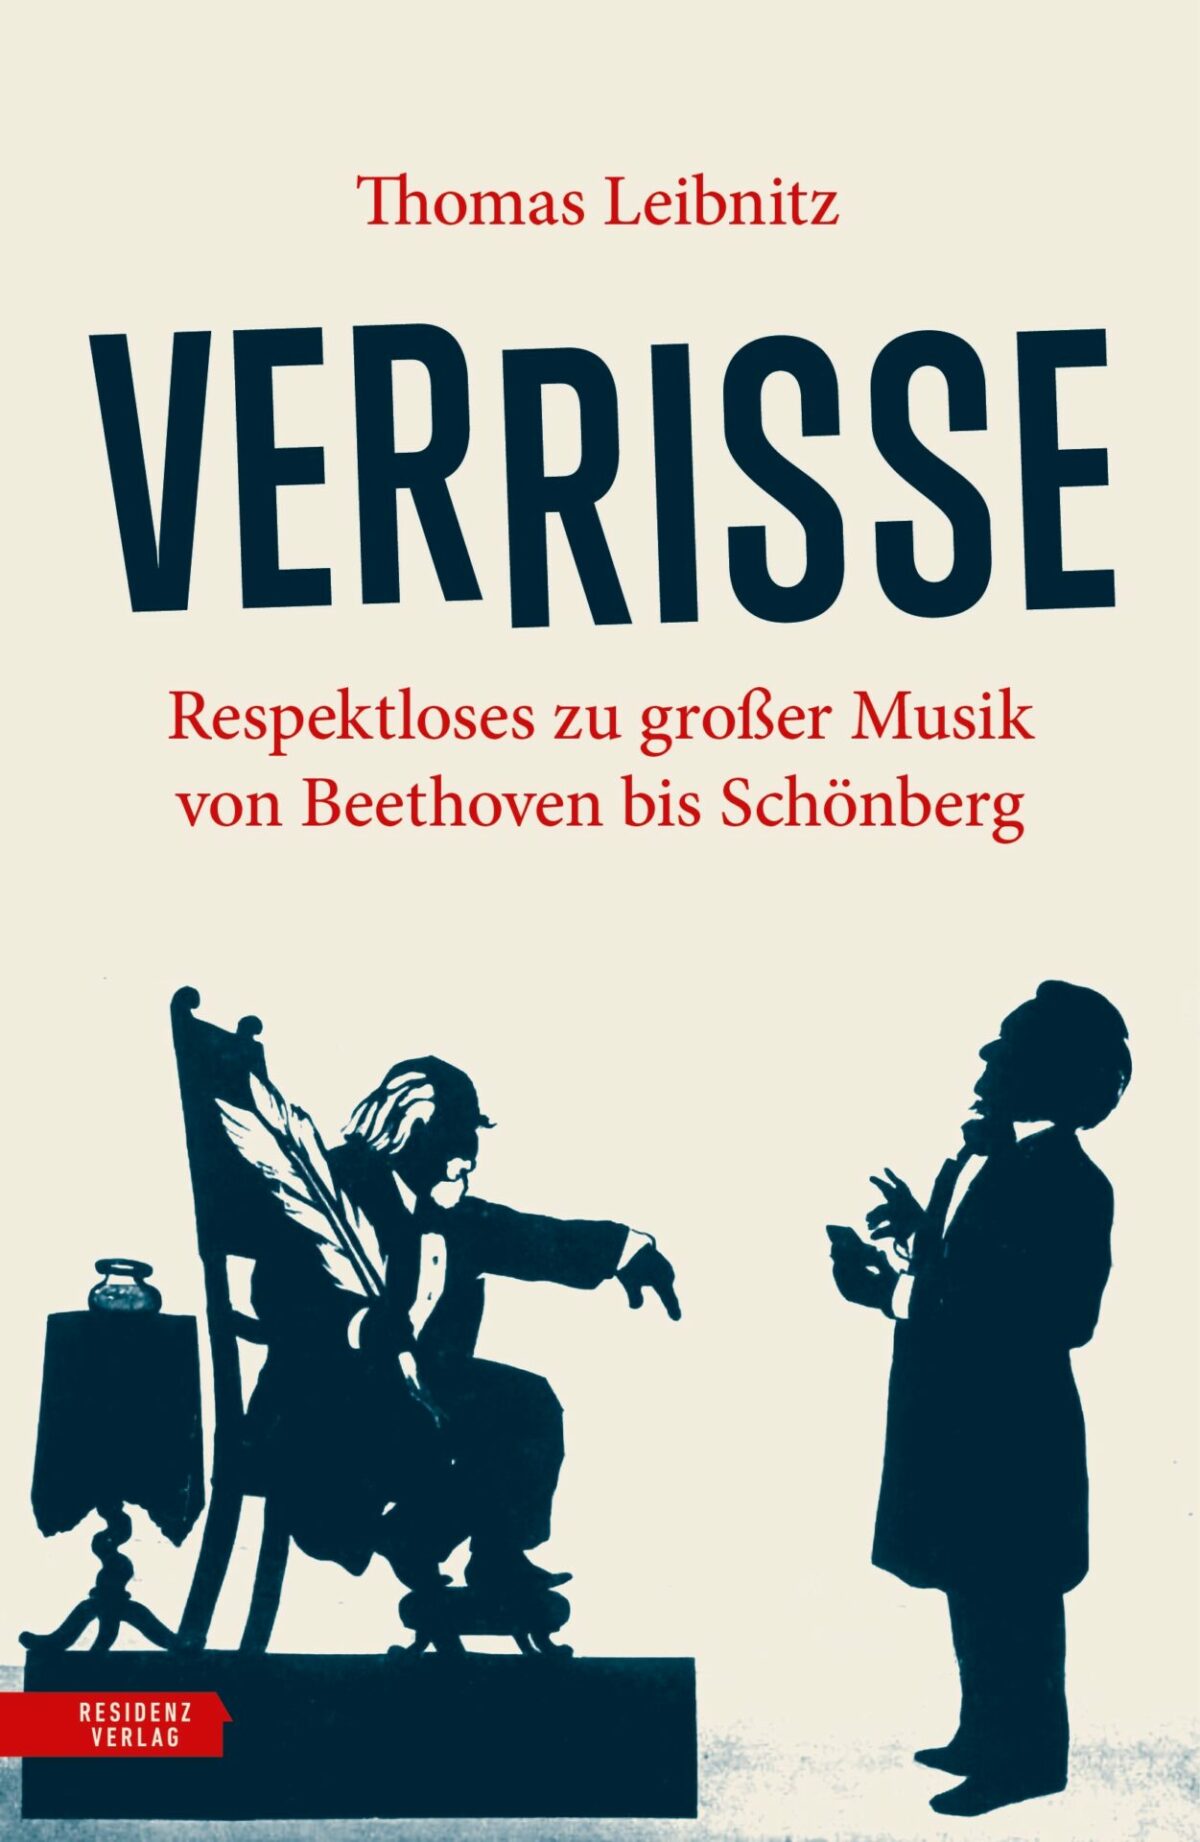 Buch-Rezension: Thomas Leibnitz, Verrisse  klassik-begeistert.de, 9. Juni 2023